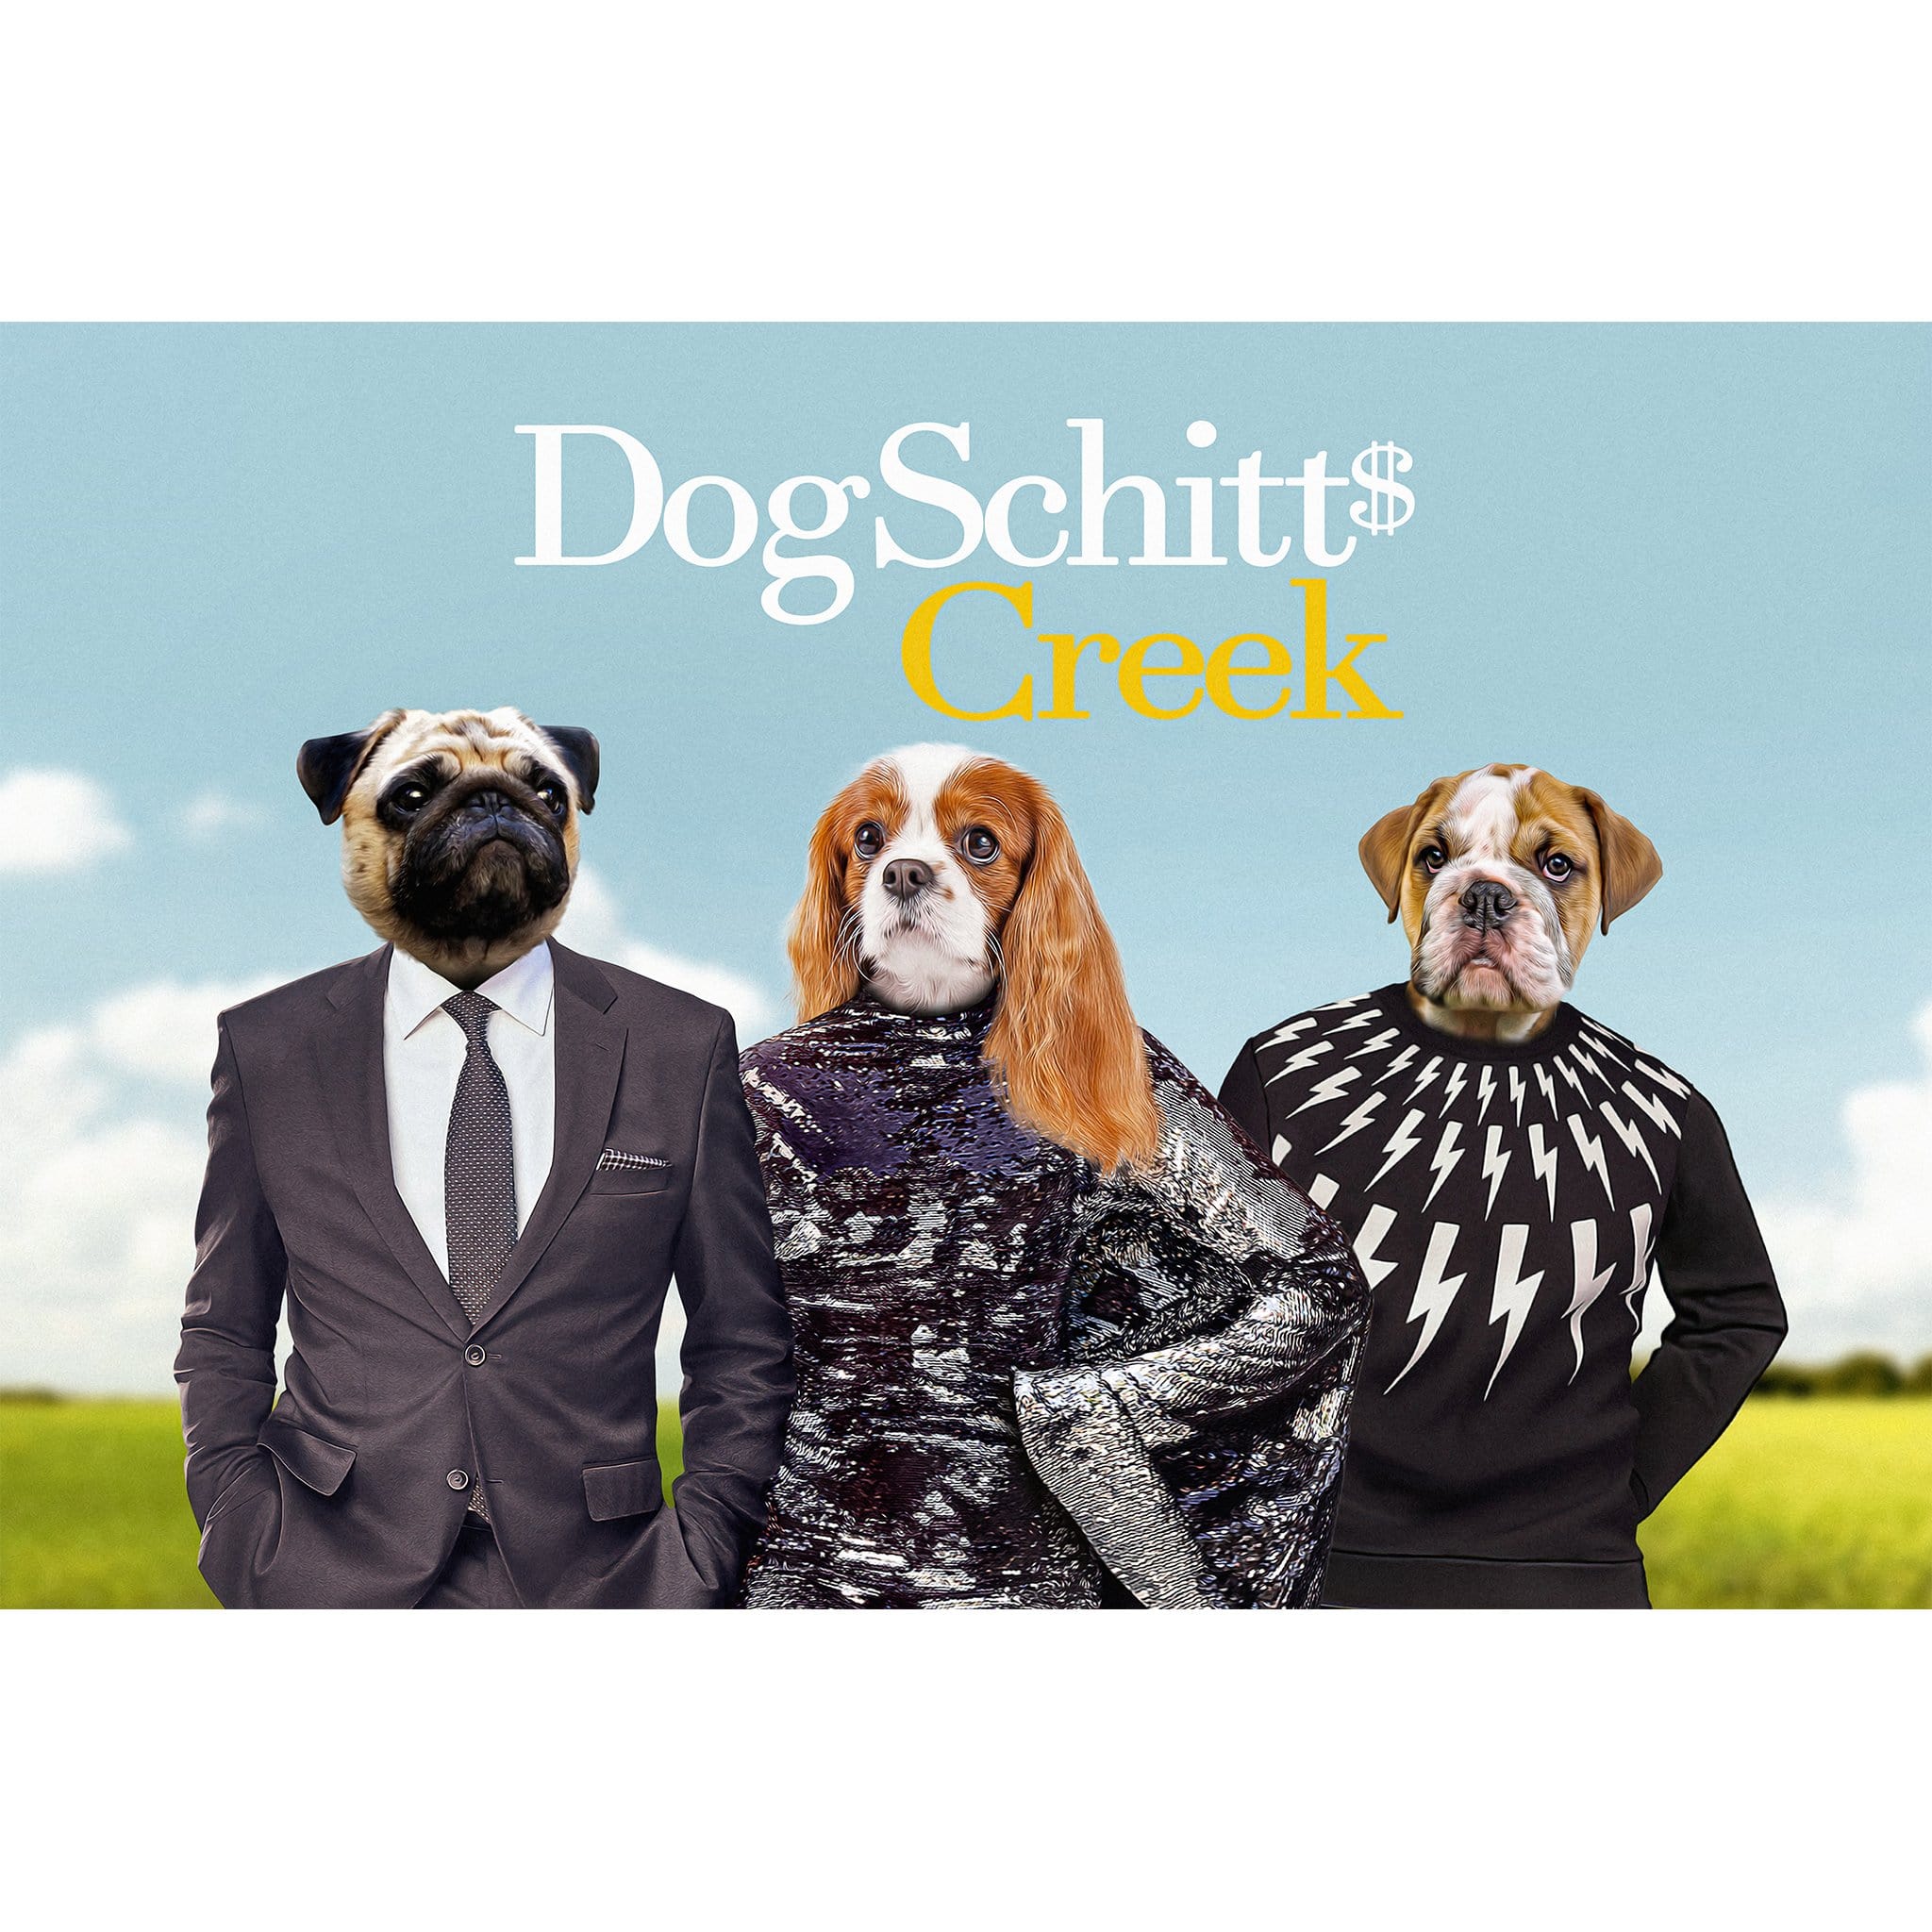 &#39;DogSchitt&#39;s Creek&#39; 3 Pet Digital Portrait